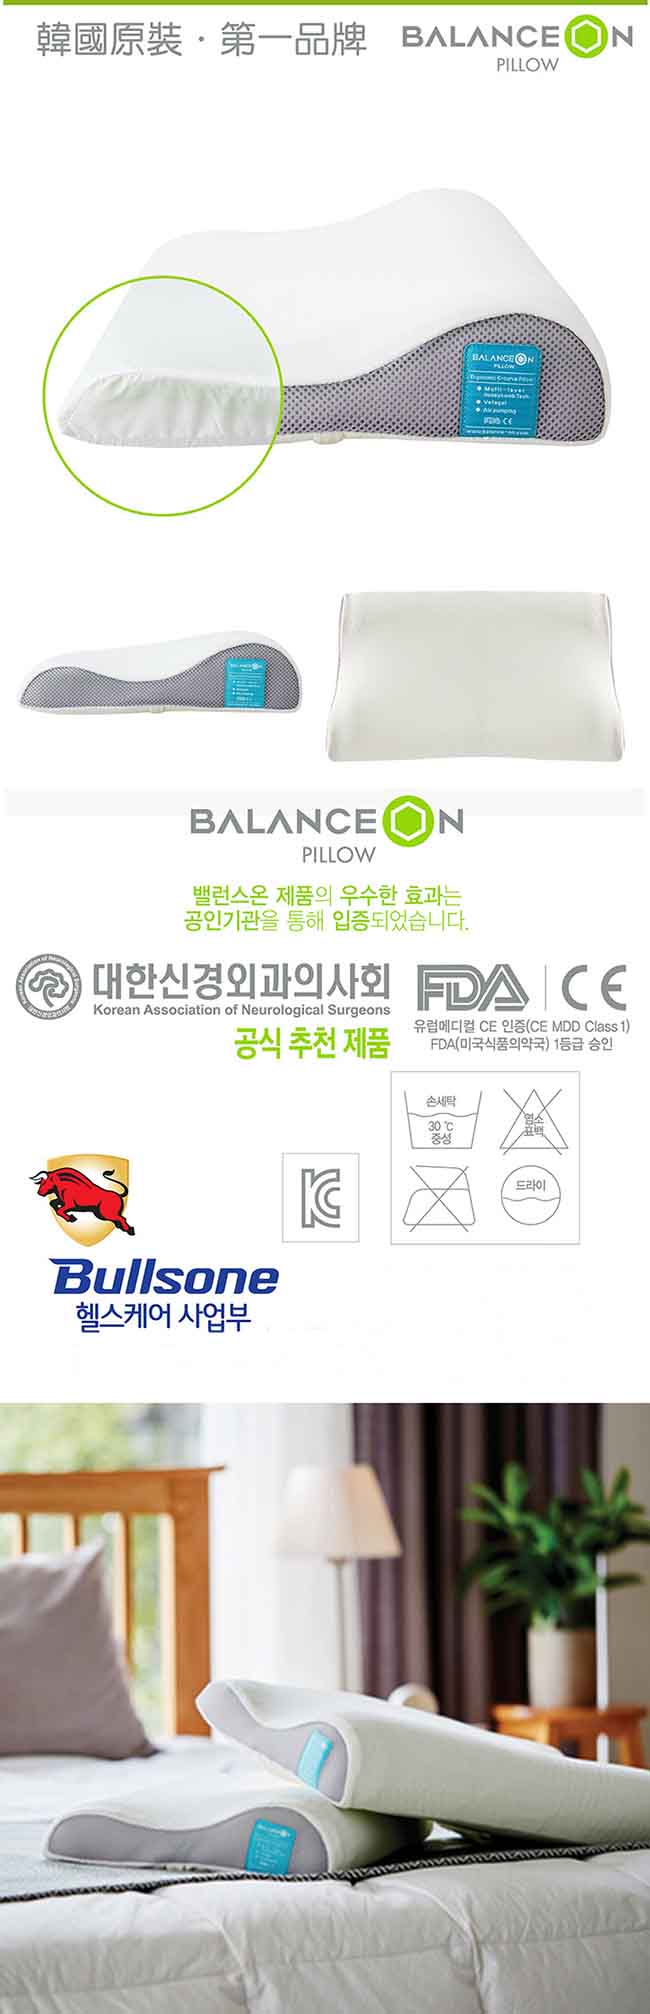 Bullsone Home蜂巢凝膠專利機能枕